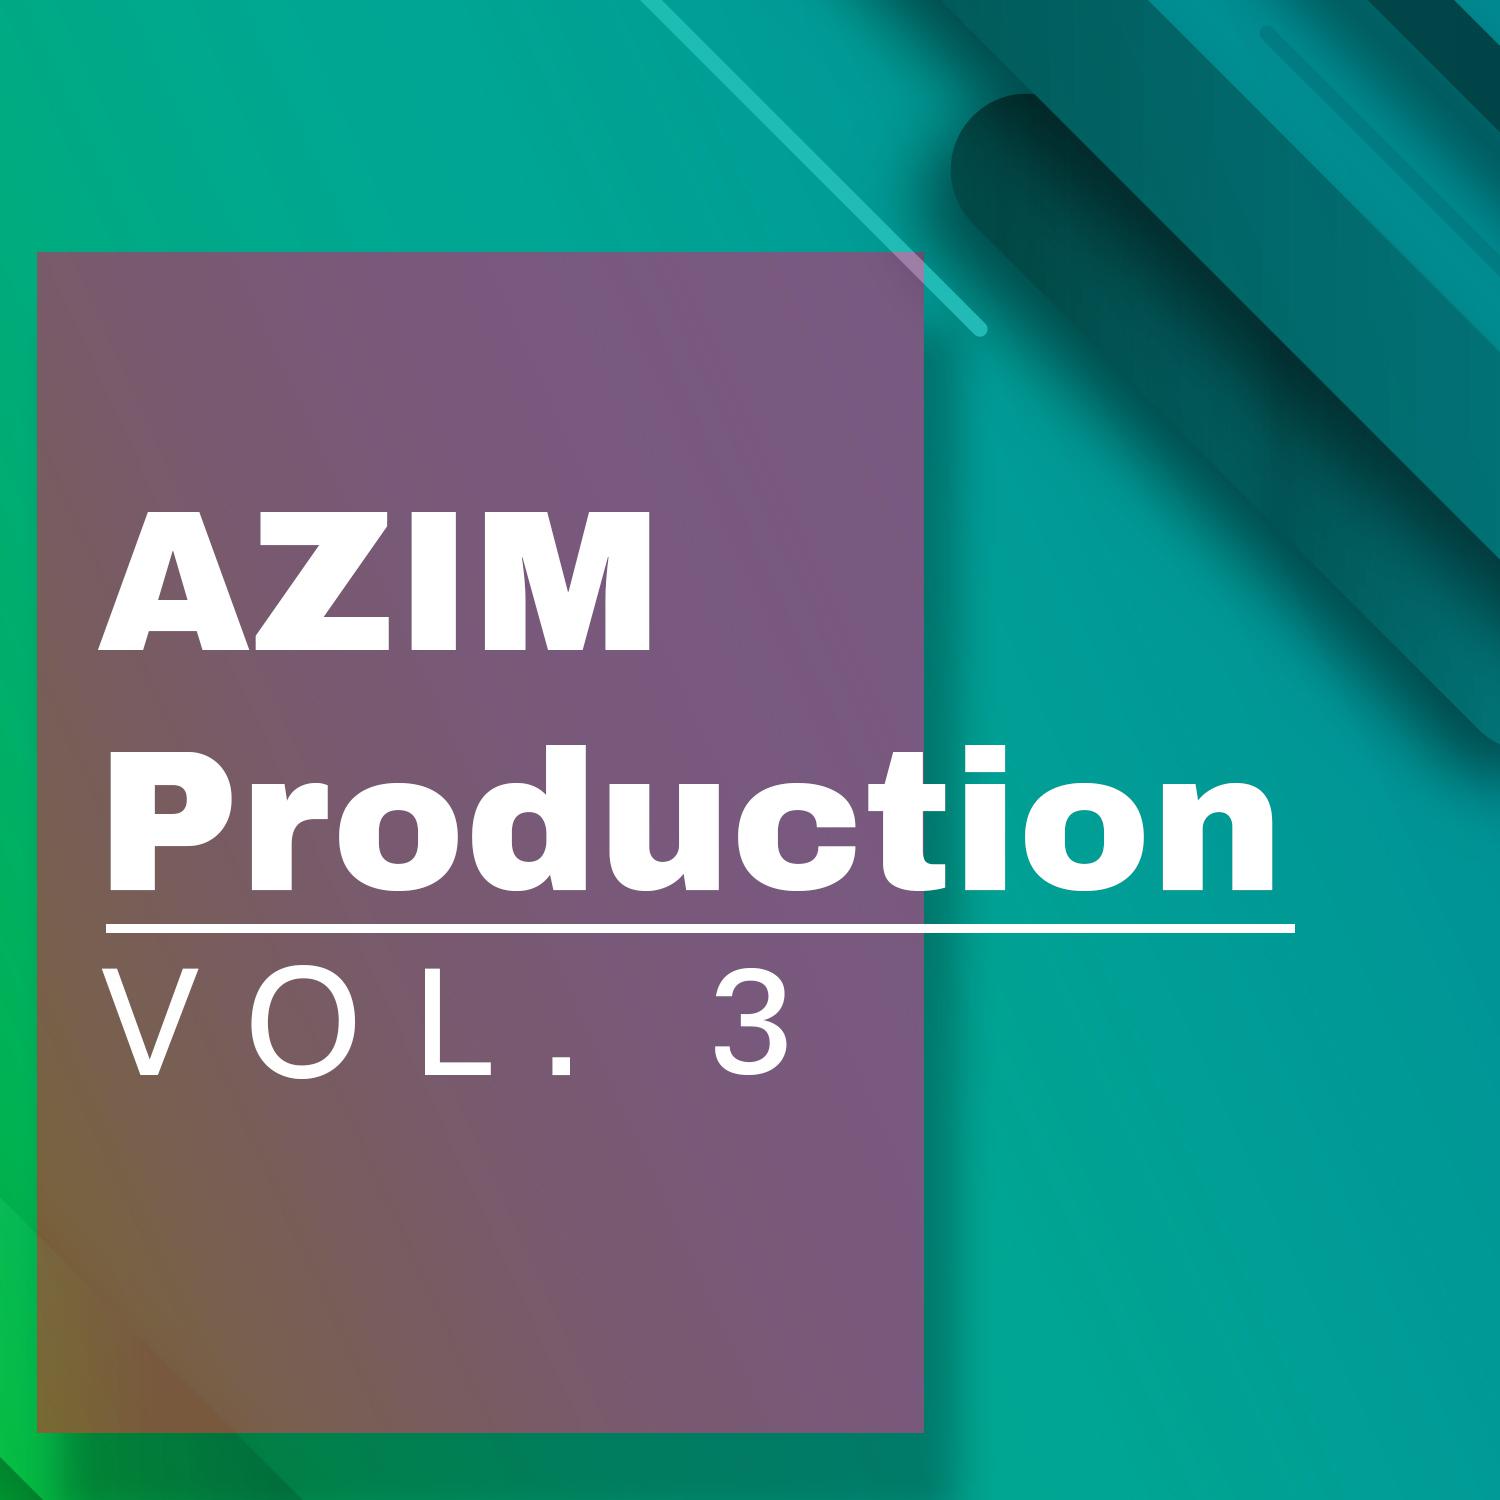 AZIM Production vol 3